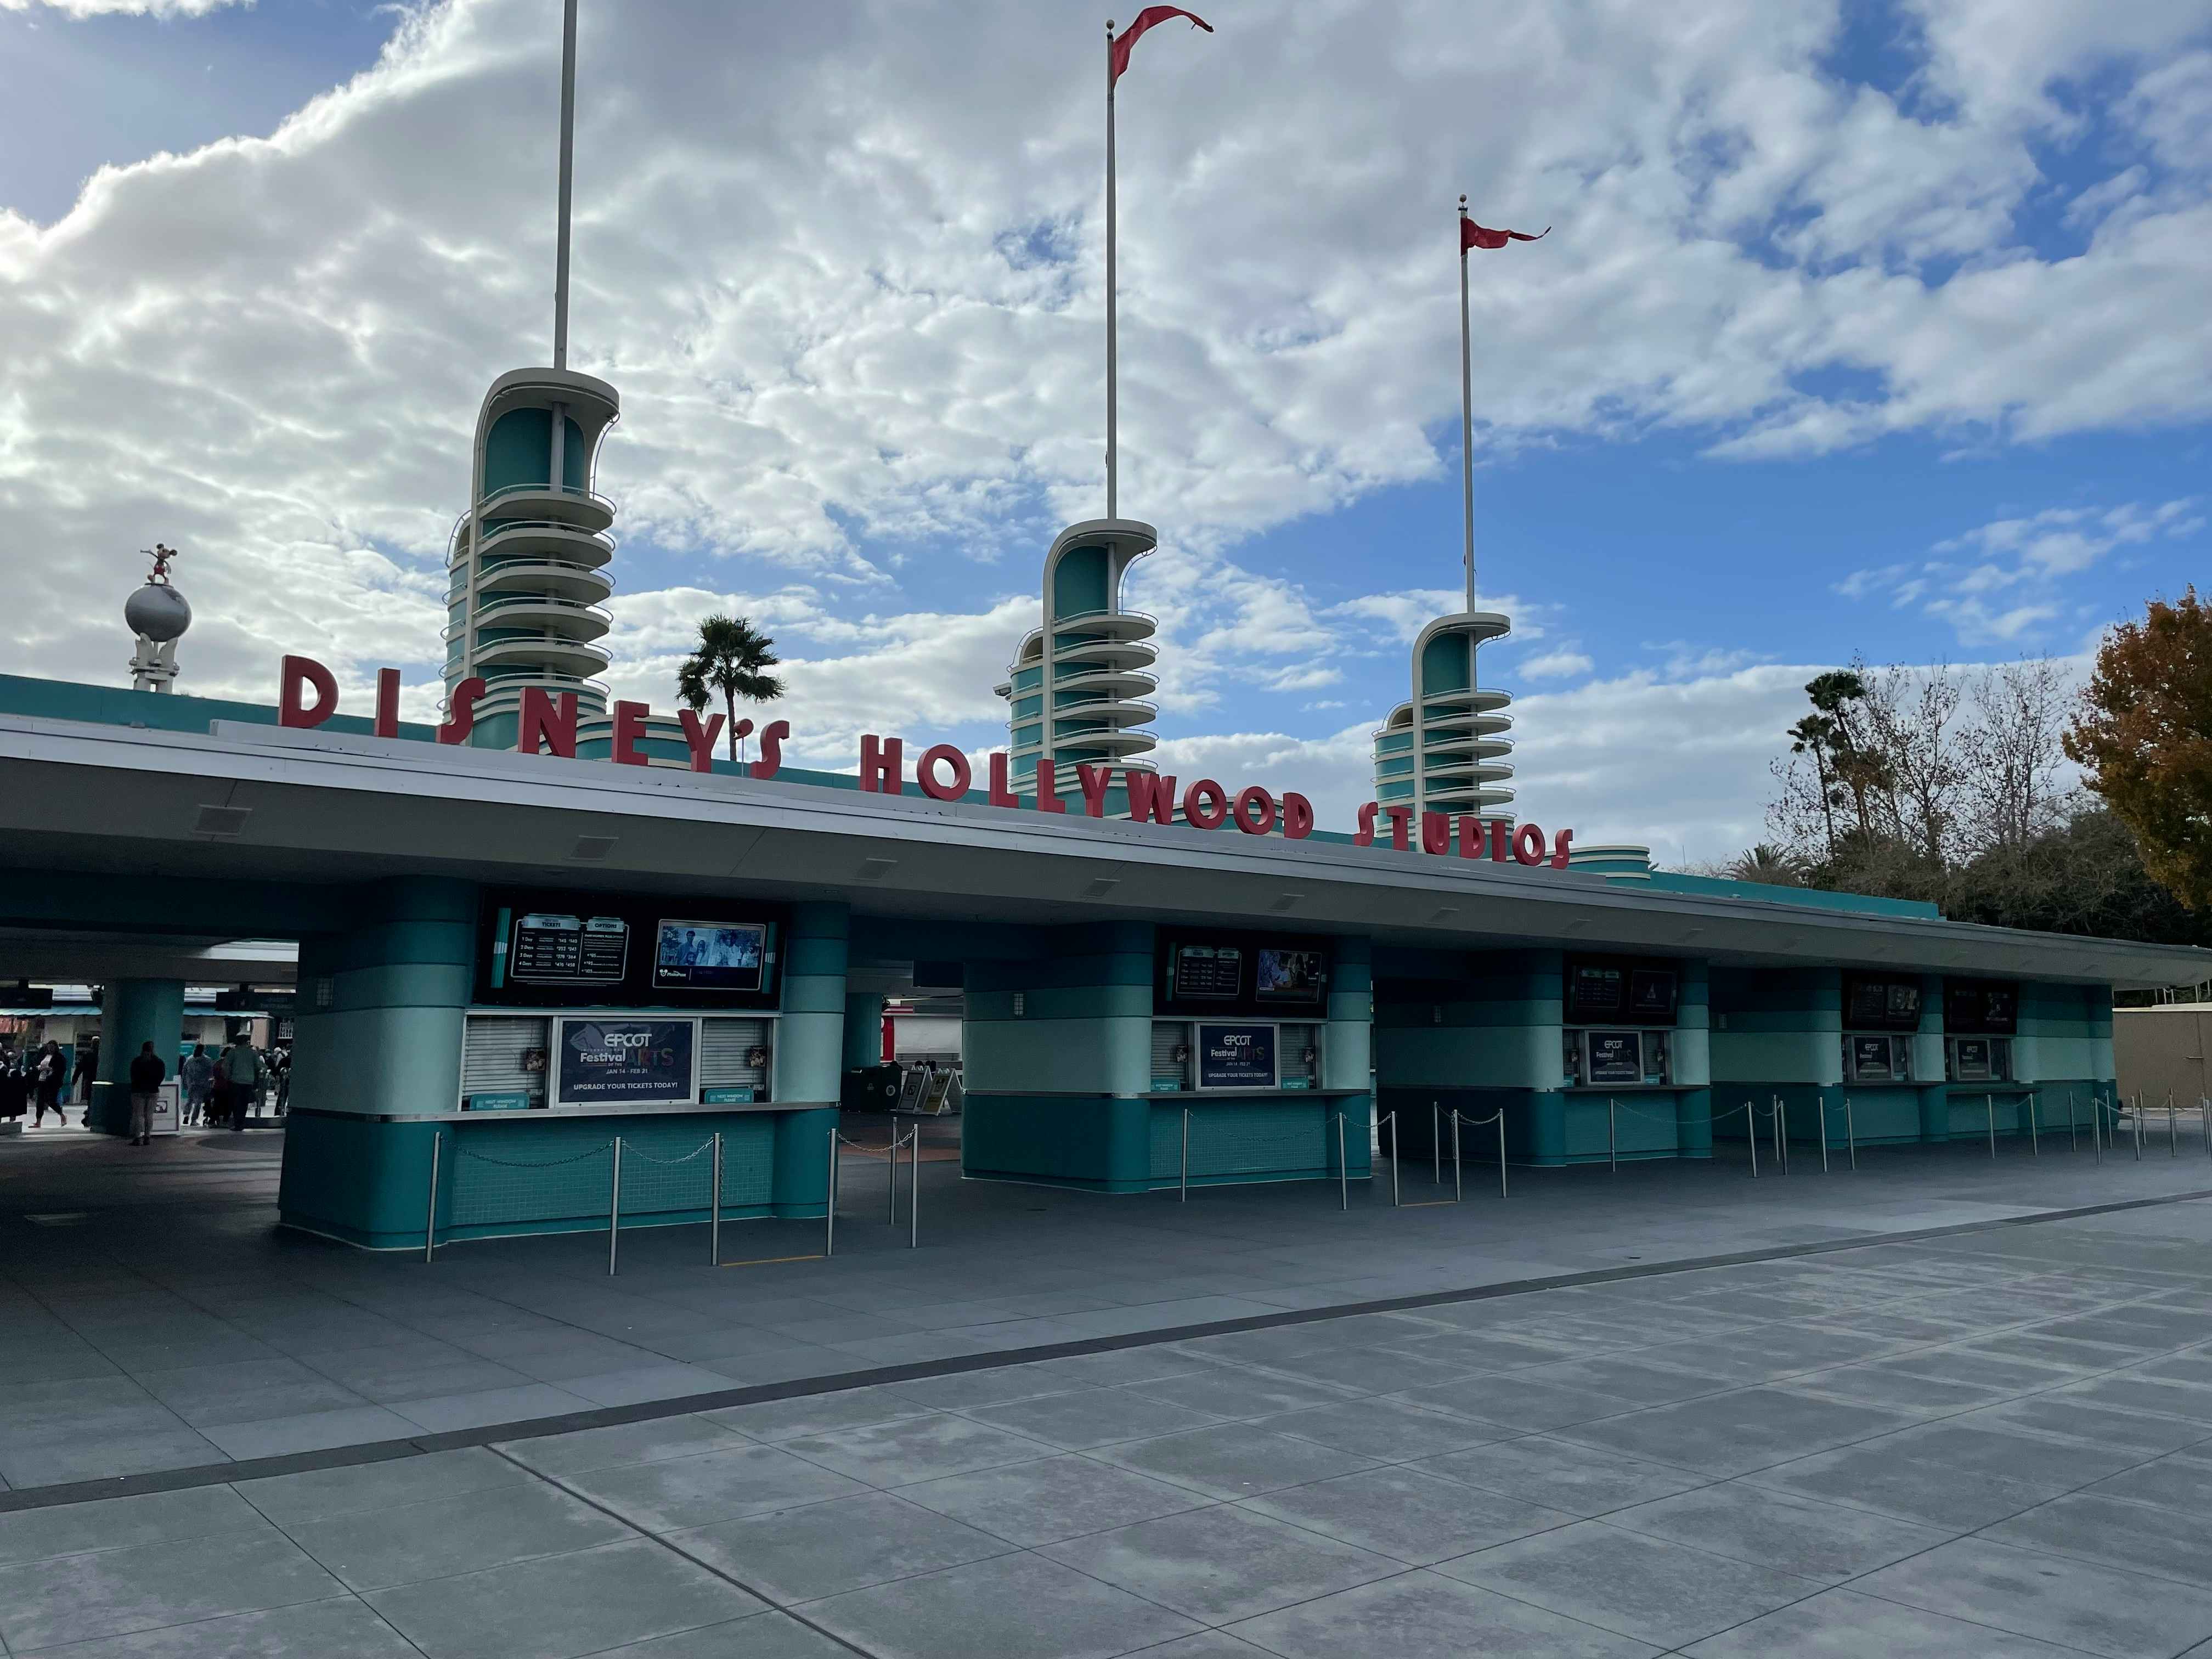 The Disney Hollywood Studios entrance.